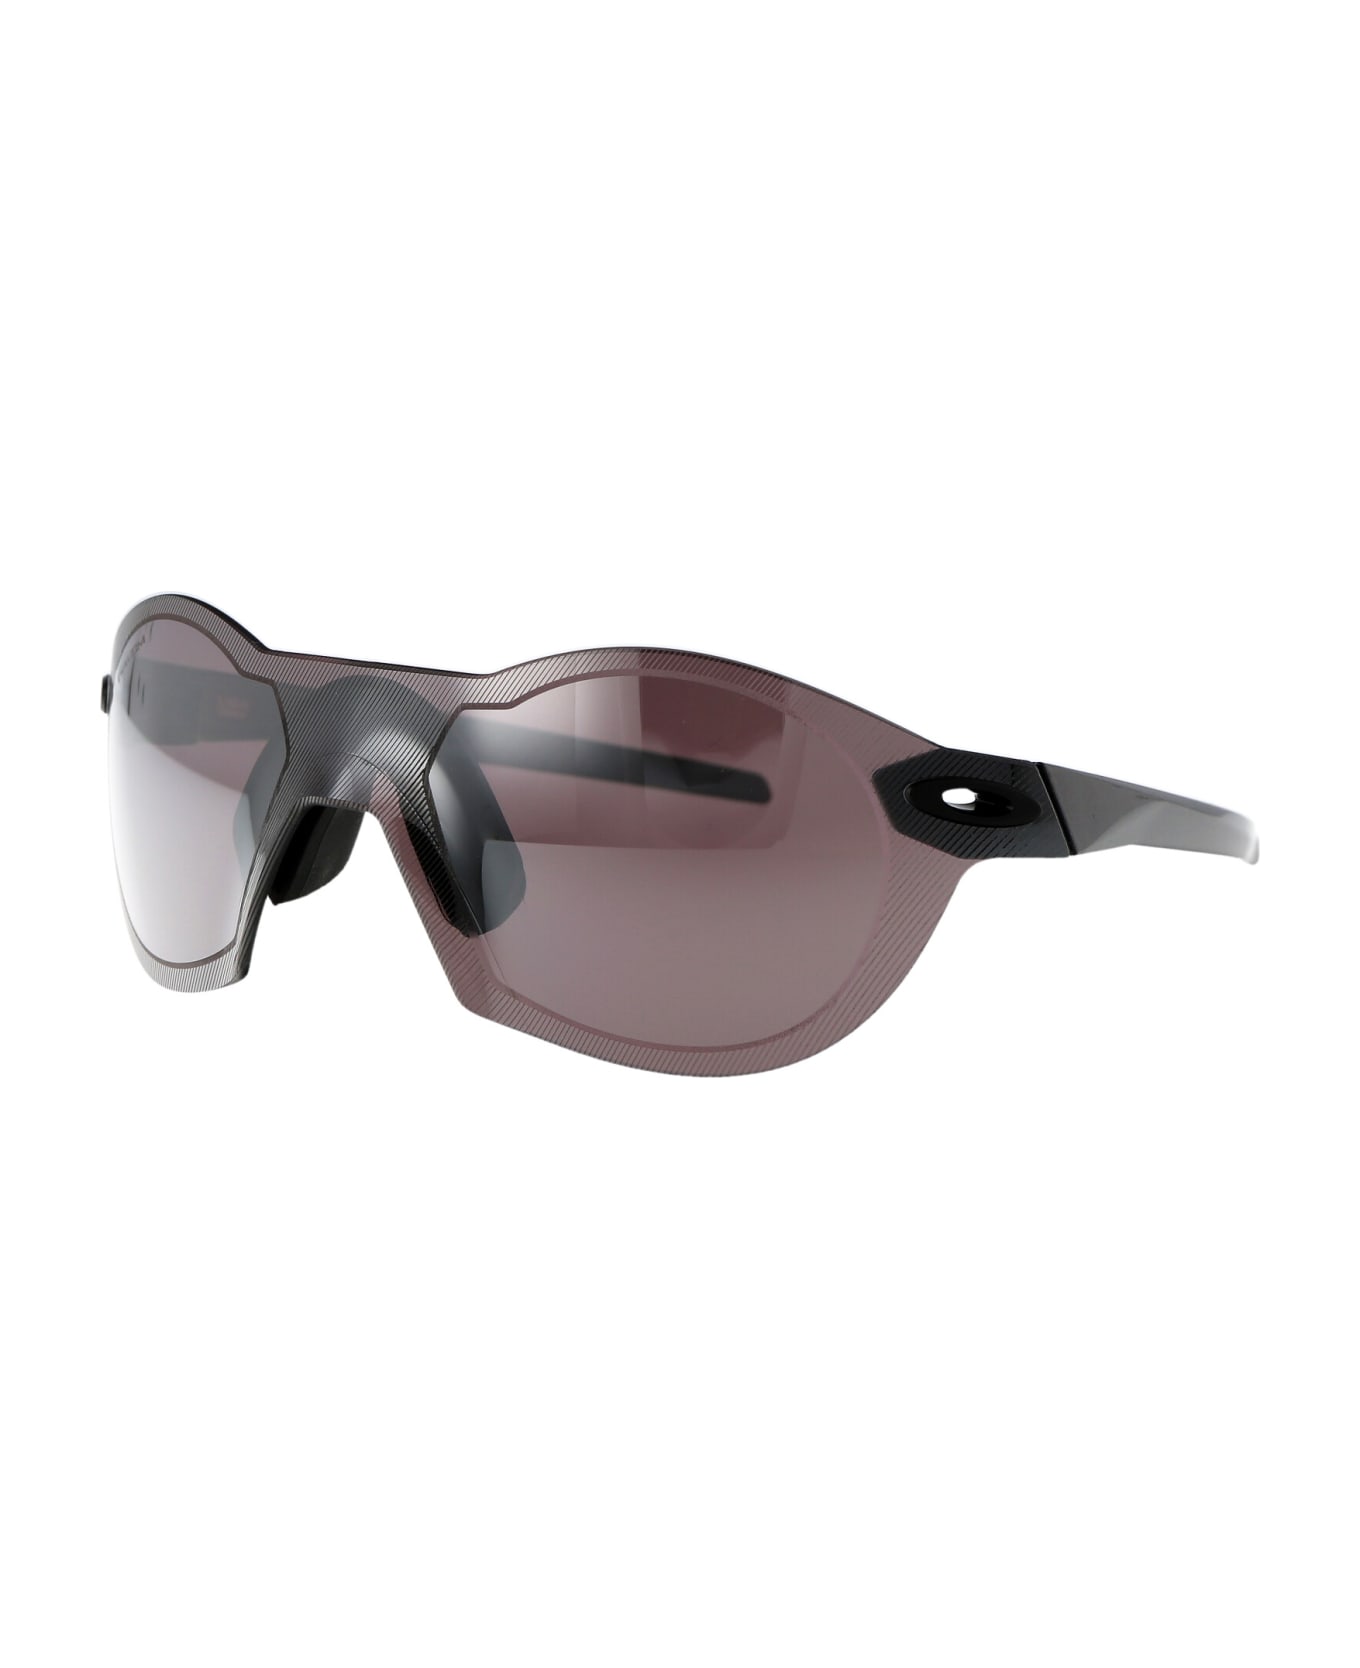 Oakley Re:subzero Sunglasses - 909814 Dark Galaxy サングラス